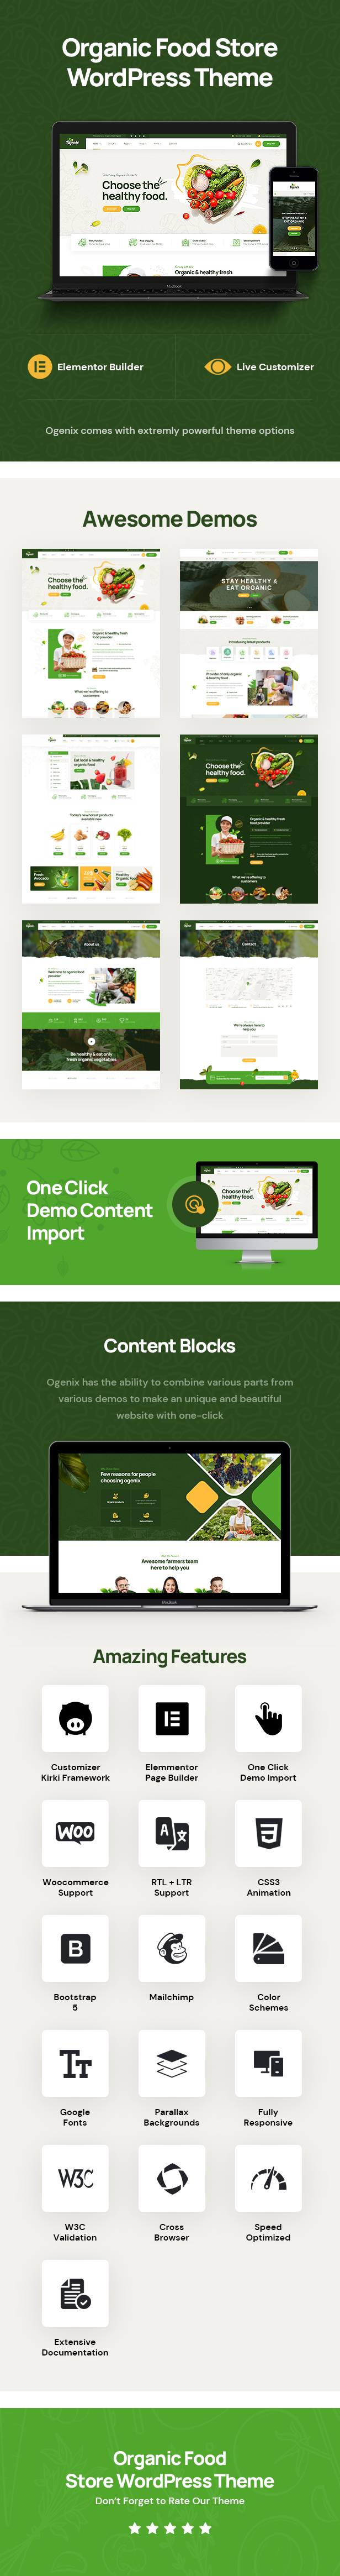 Ogenix - Organic Food Store WordPress Theme - 1